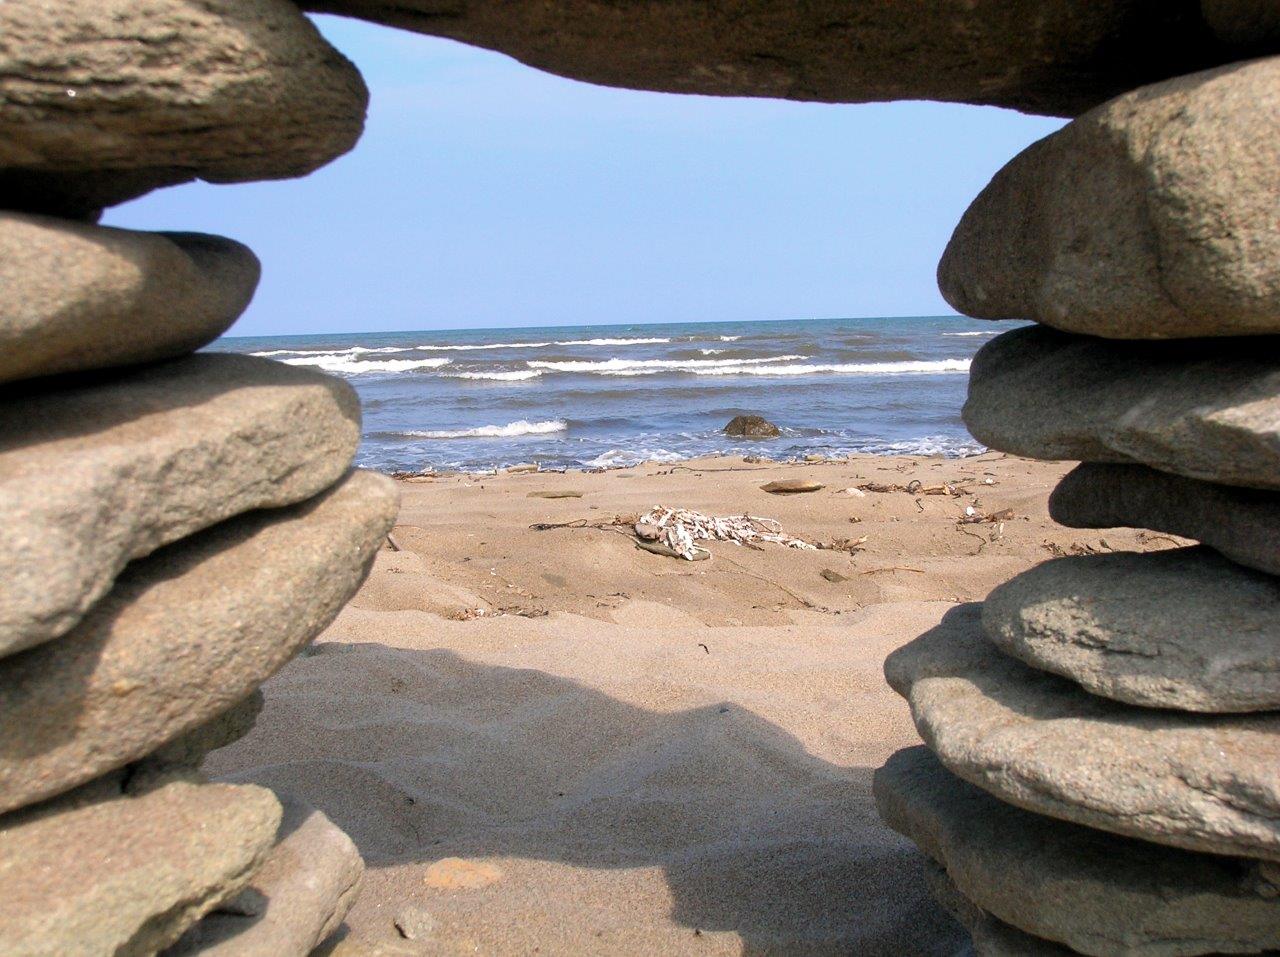 Ocean landscape framed with beach stones